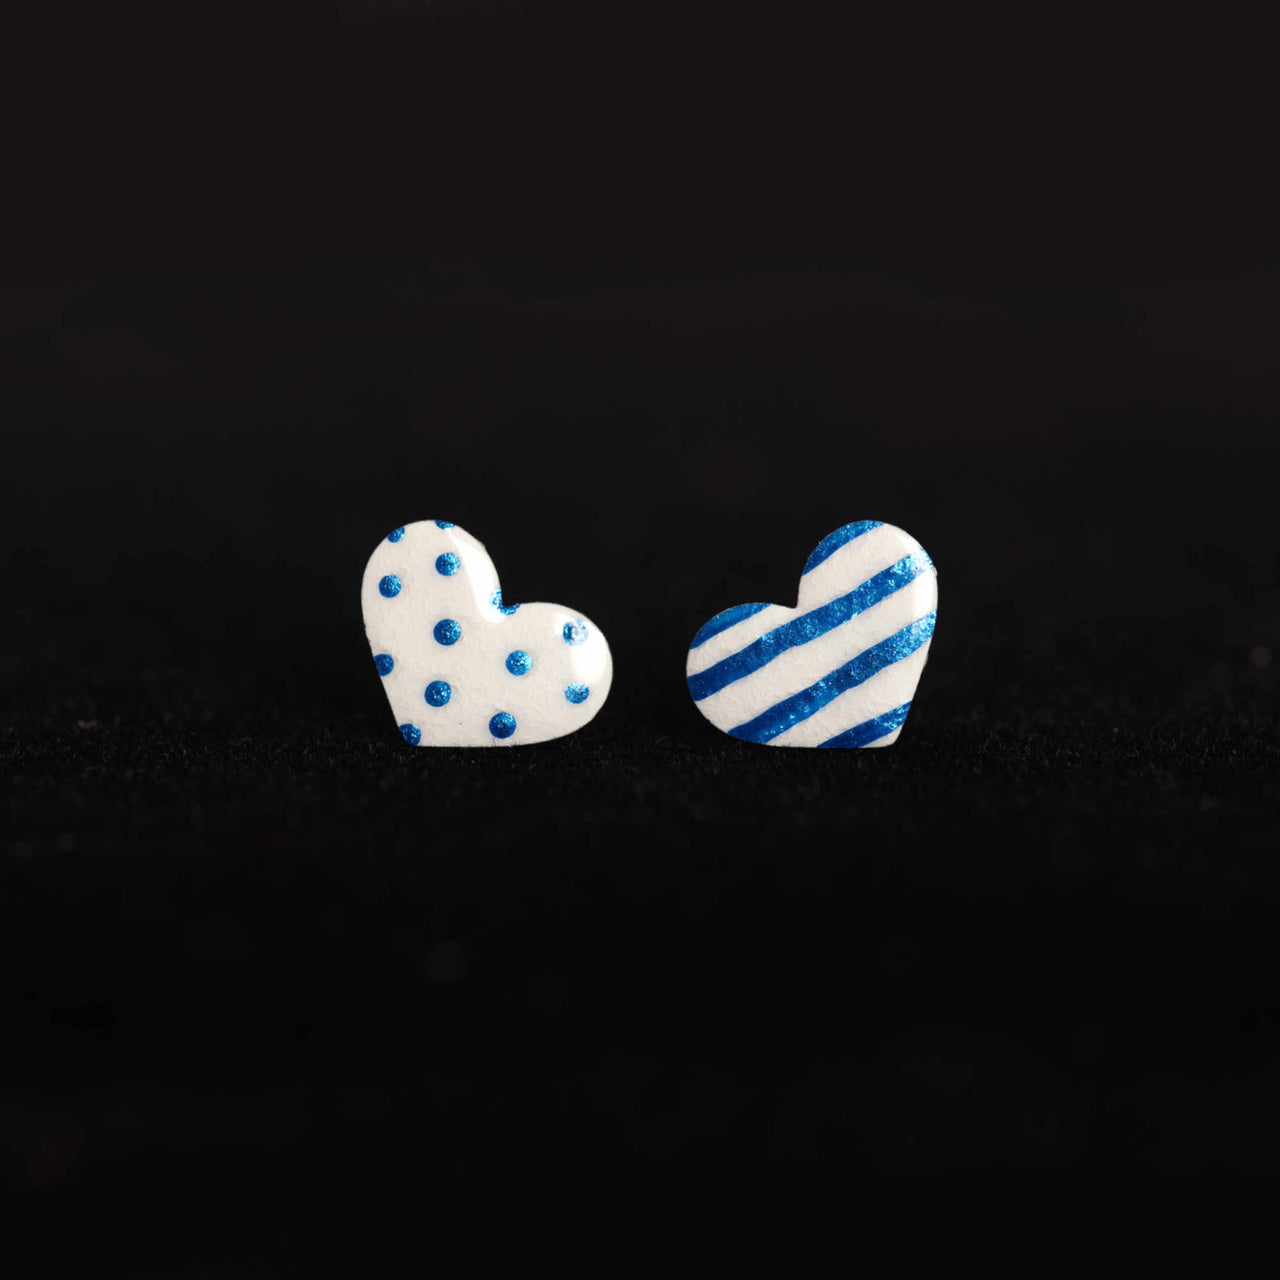 Mismatched heart earrings